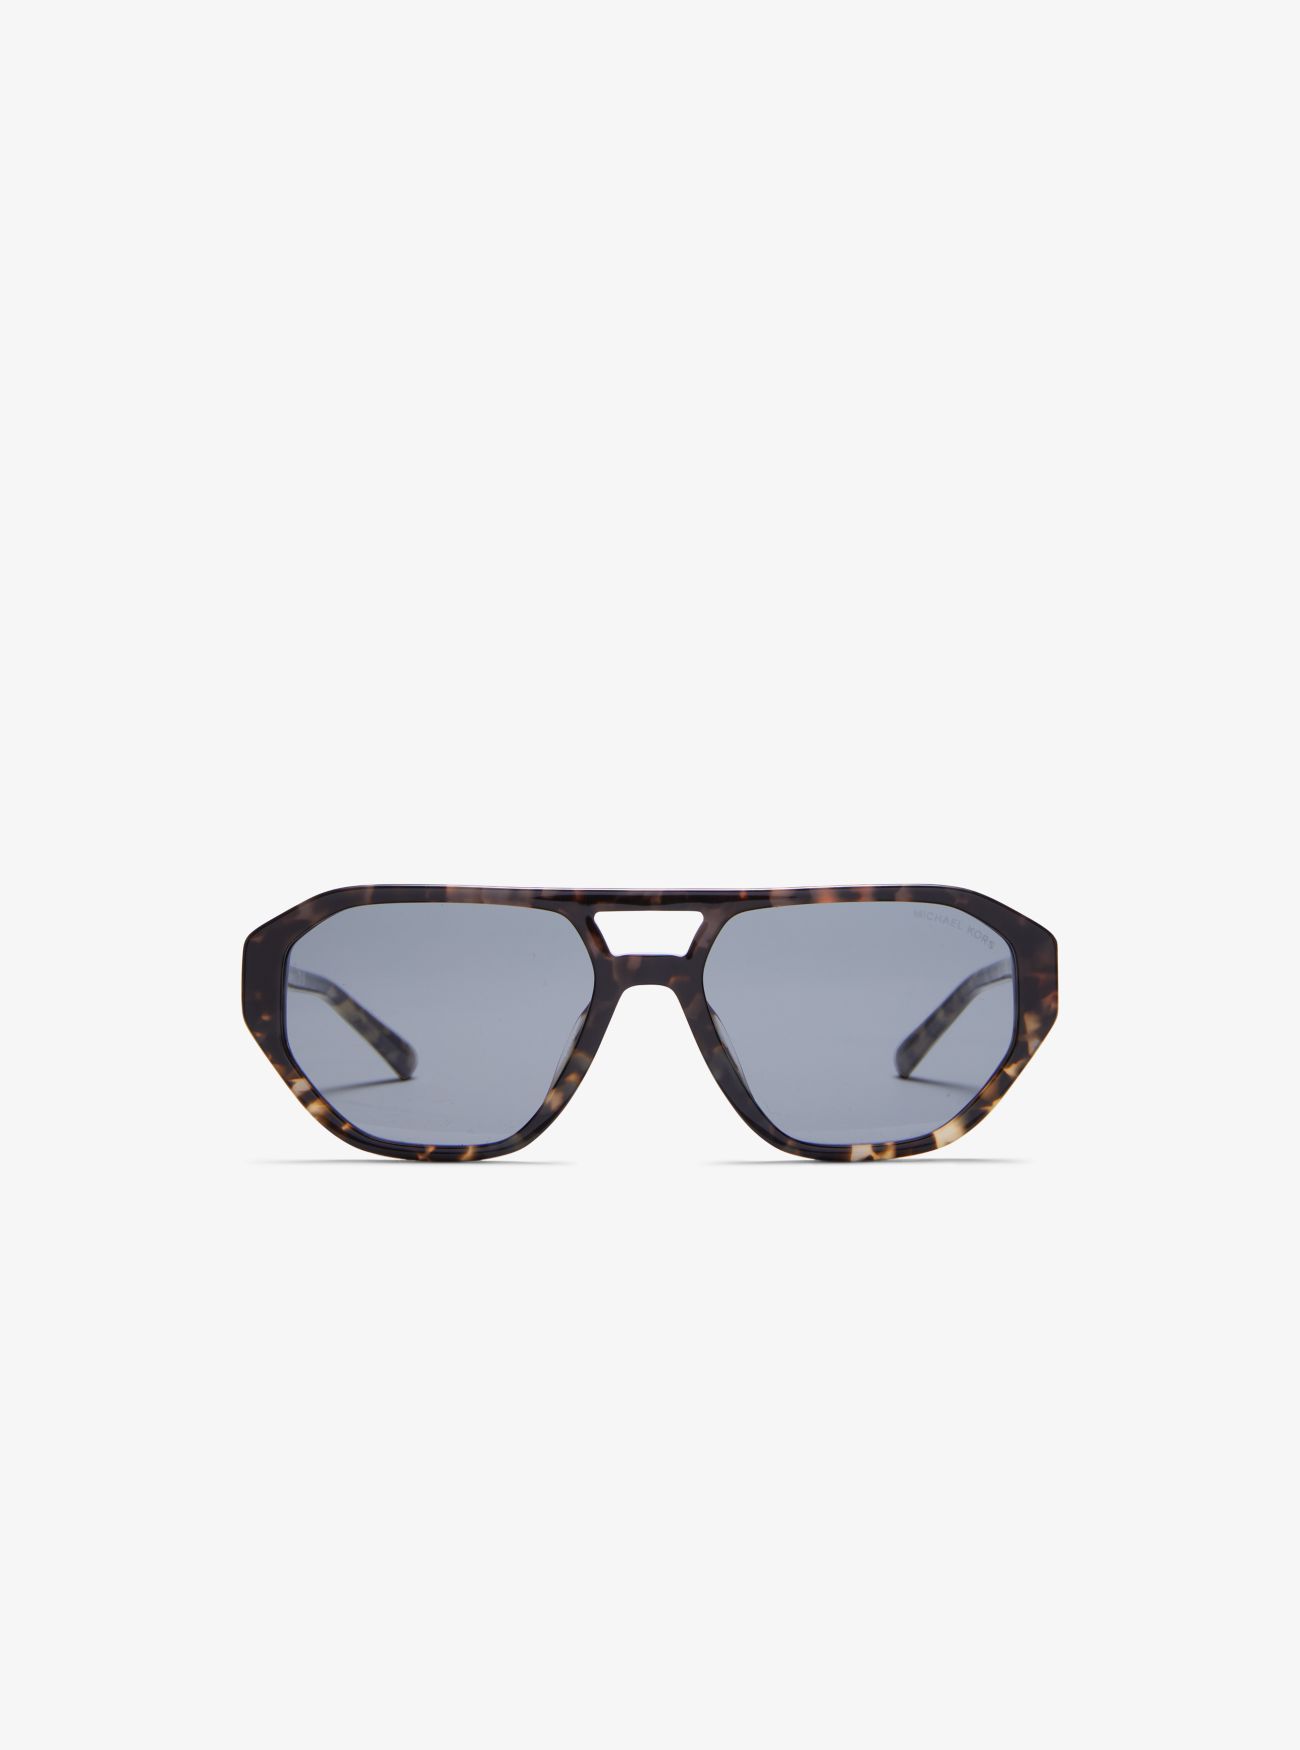 MK Zurich Sunglasses - Black - Michael Kors